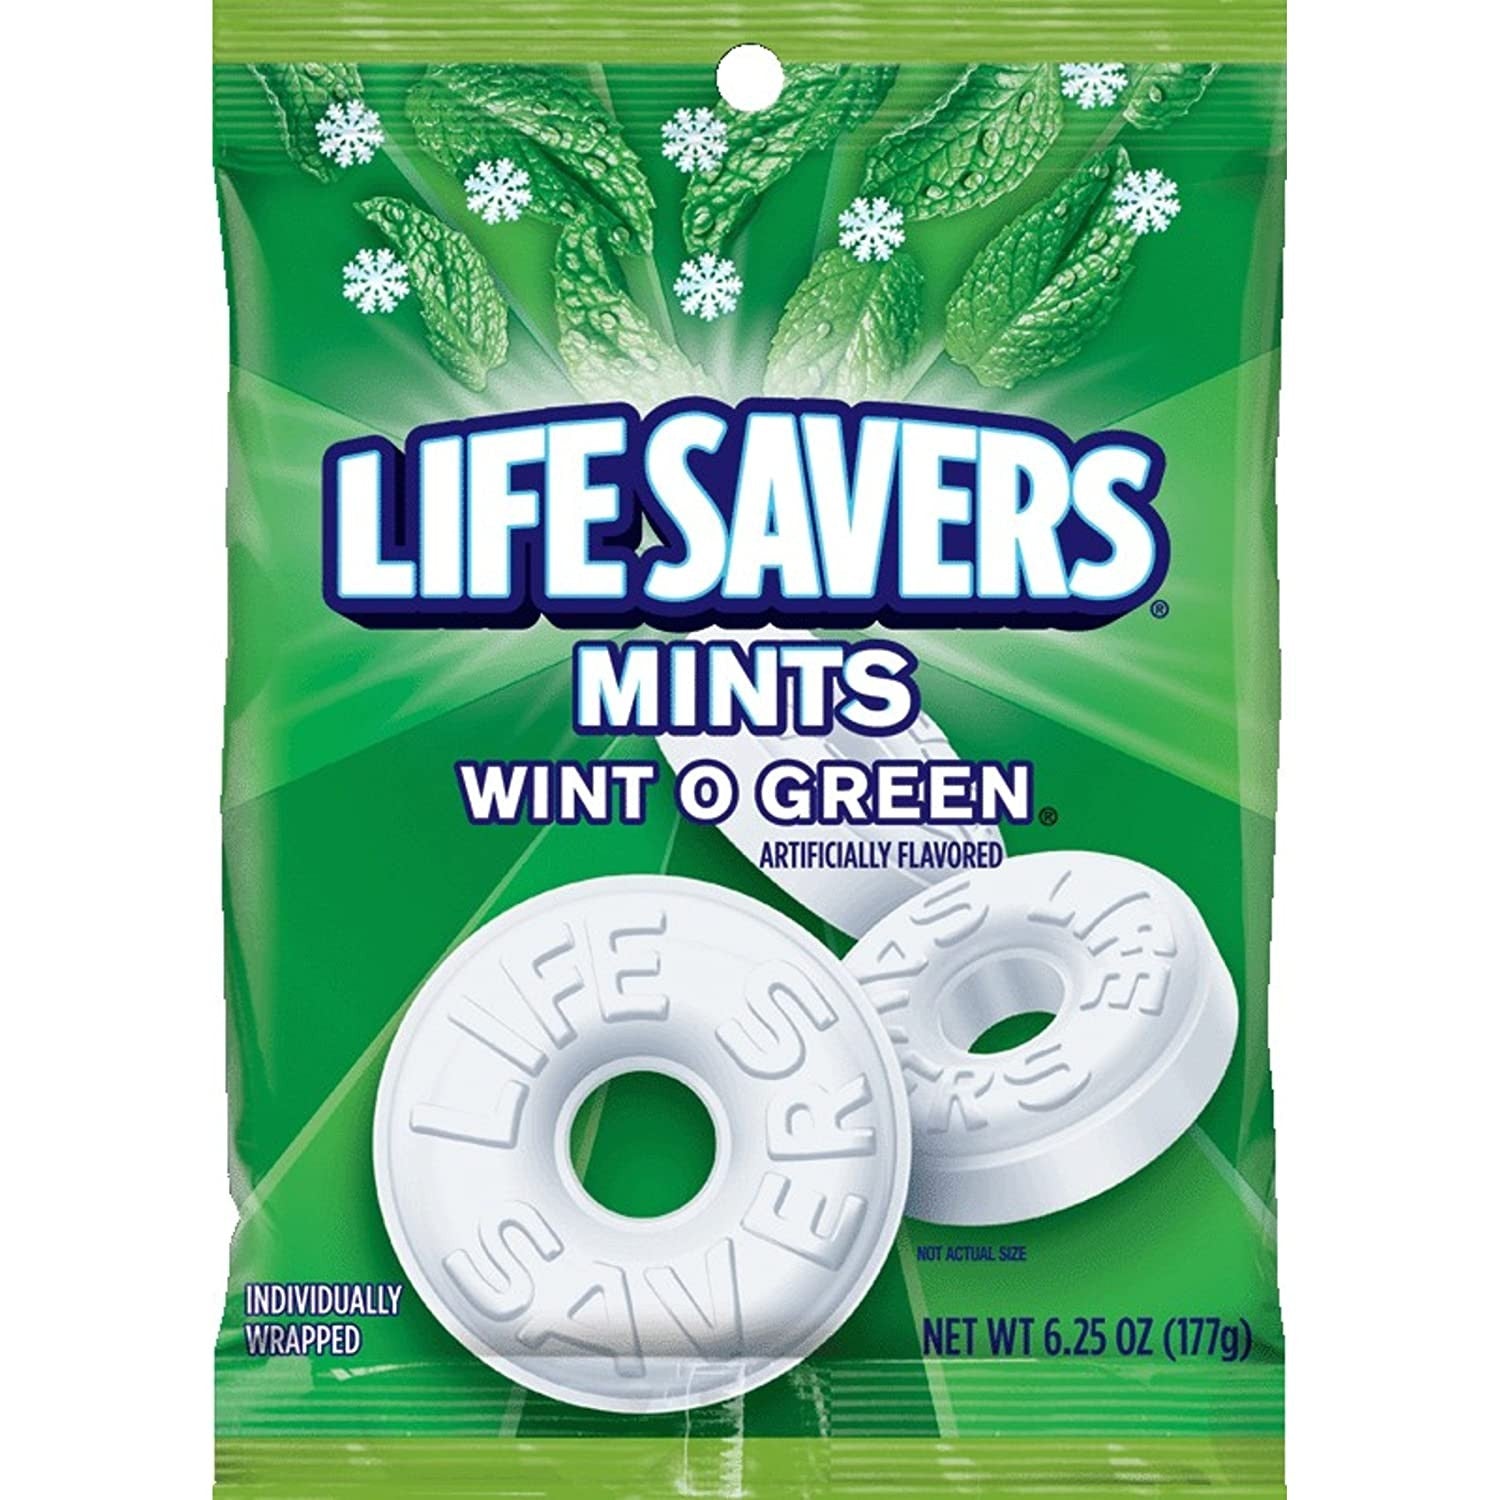 Life Savers, Five Flavor Hard Candy Peg Bag, 6.25 oz (1 count